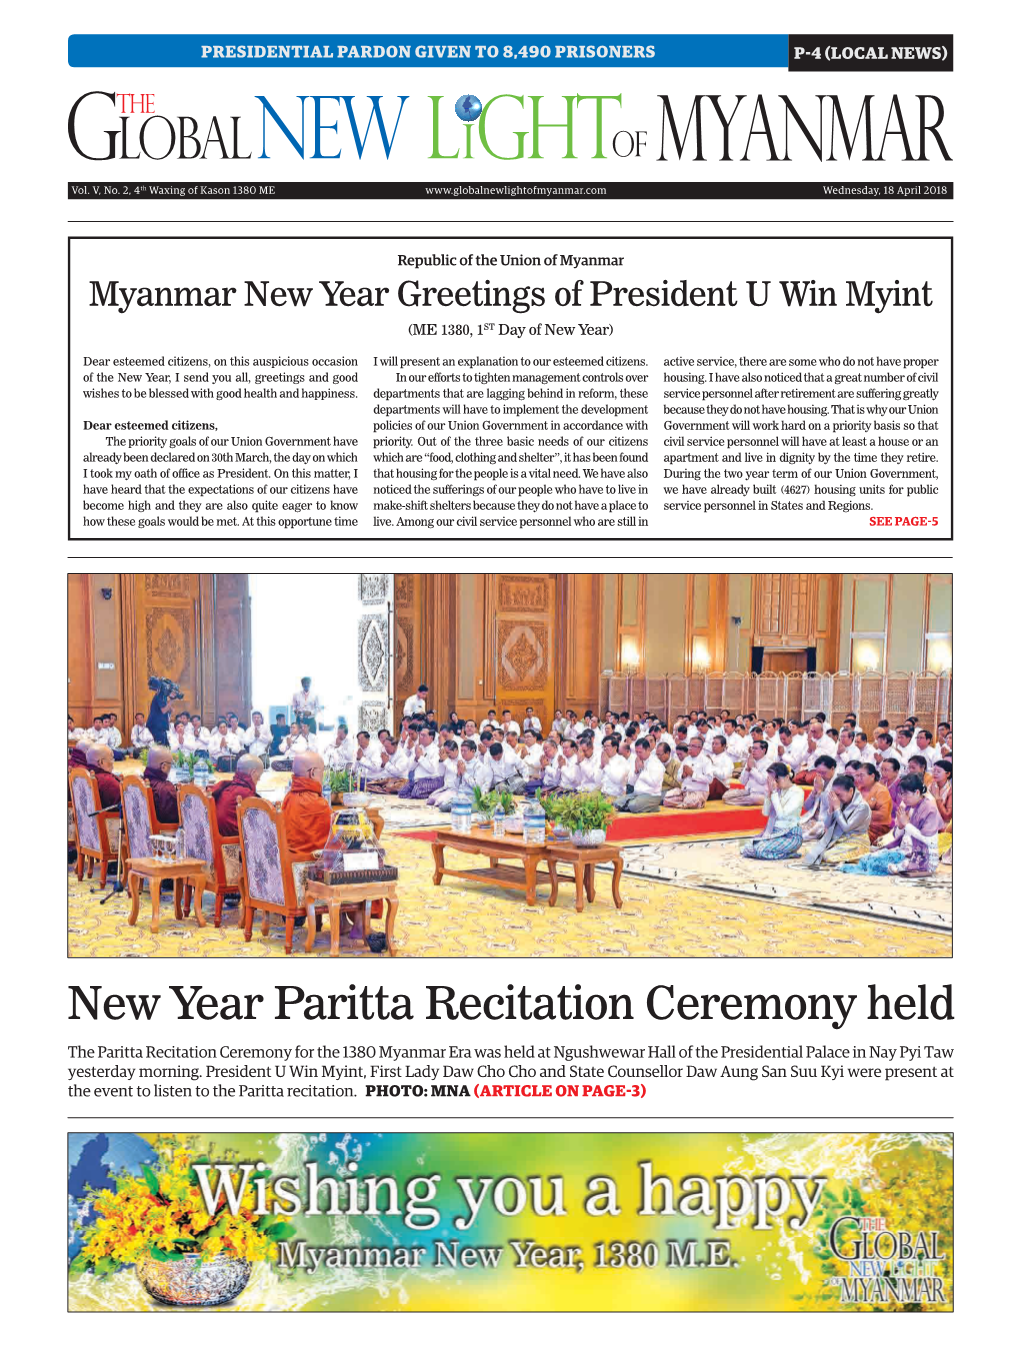 New Year Paritta Recitation Ceremony Held